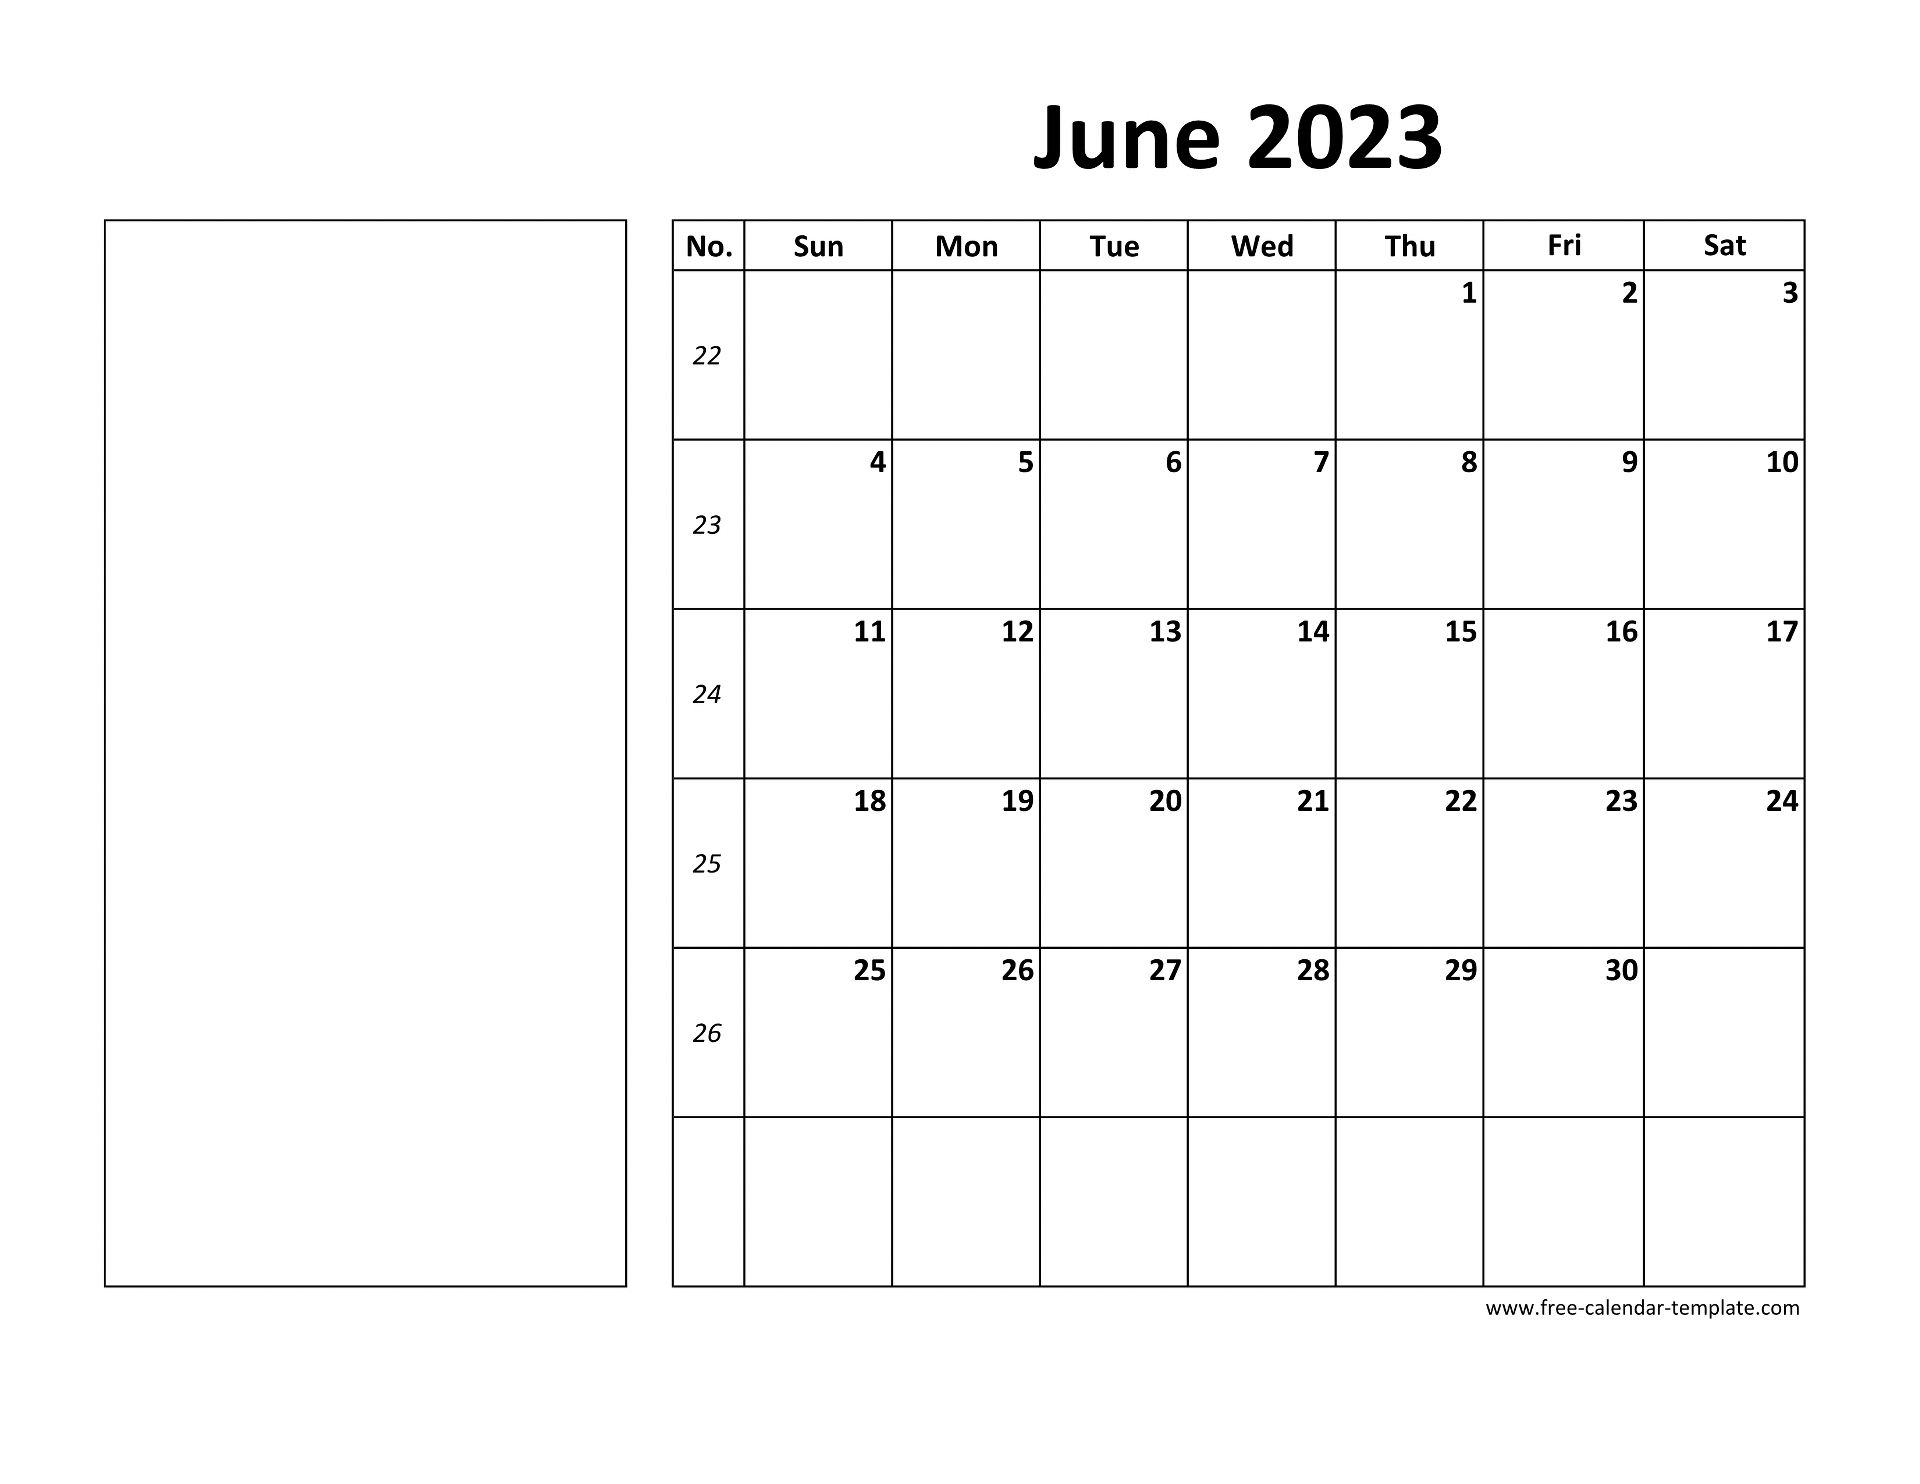 printable-june-2023-calendar-box-and-lines-for-notes-free-calendar